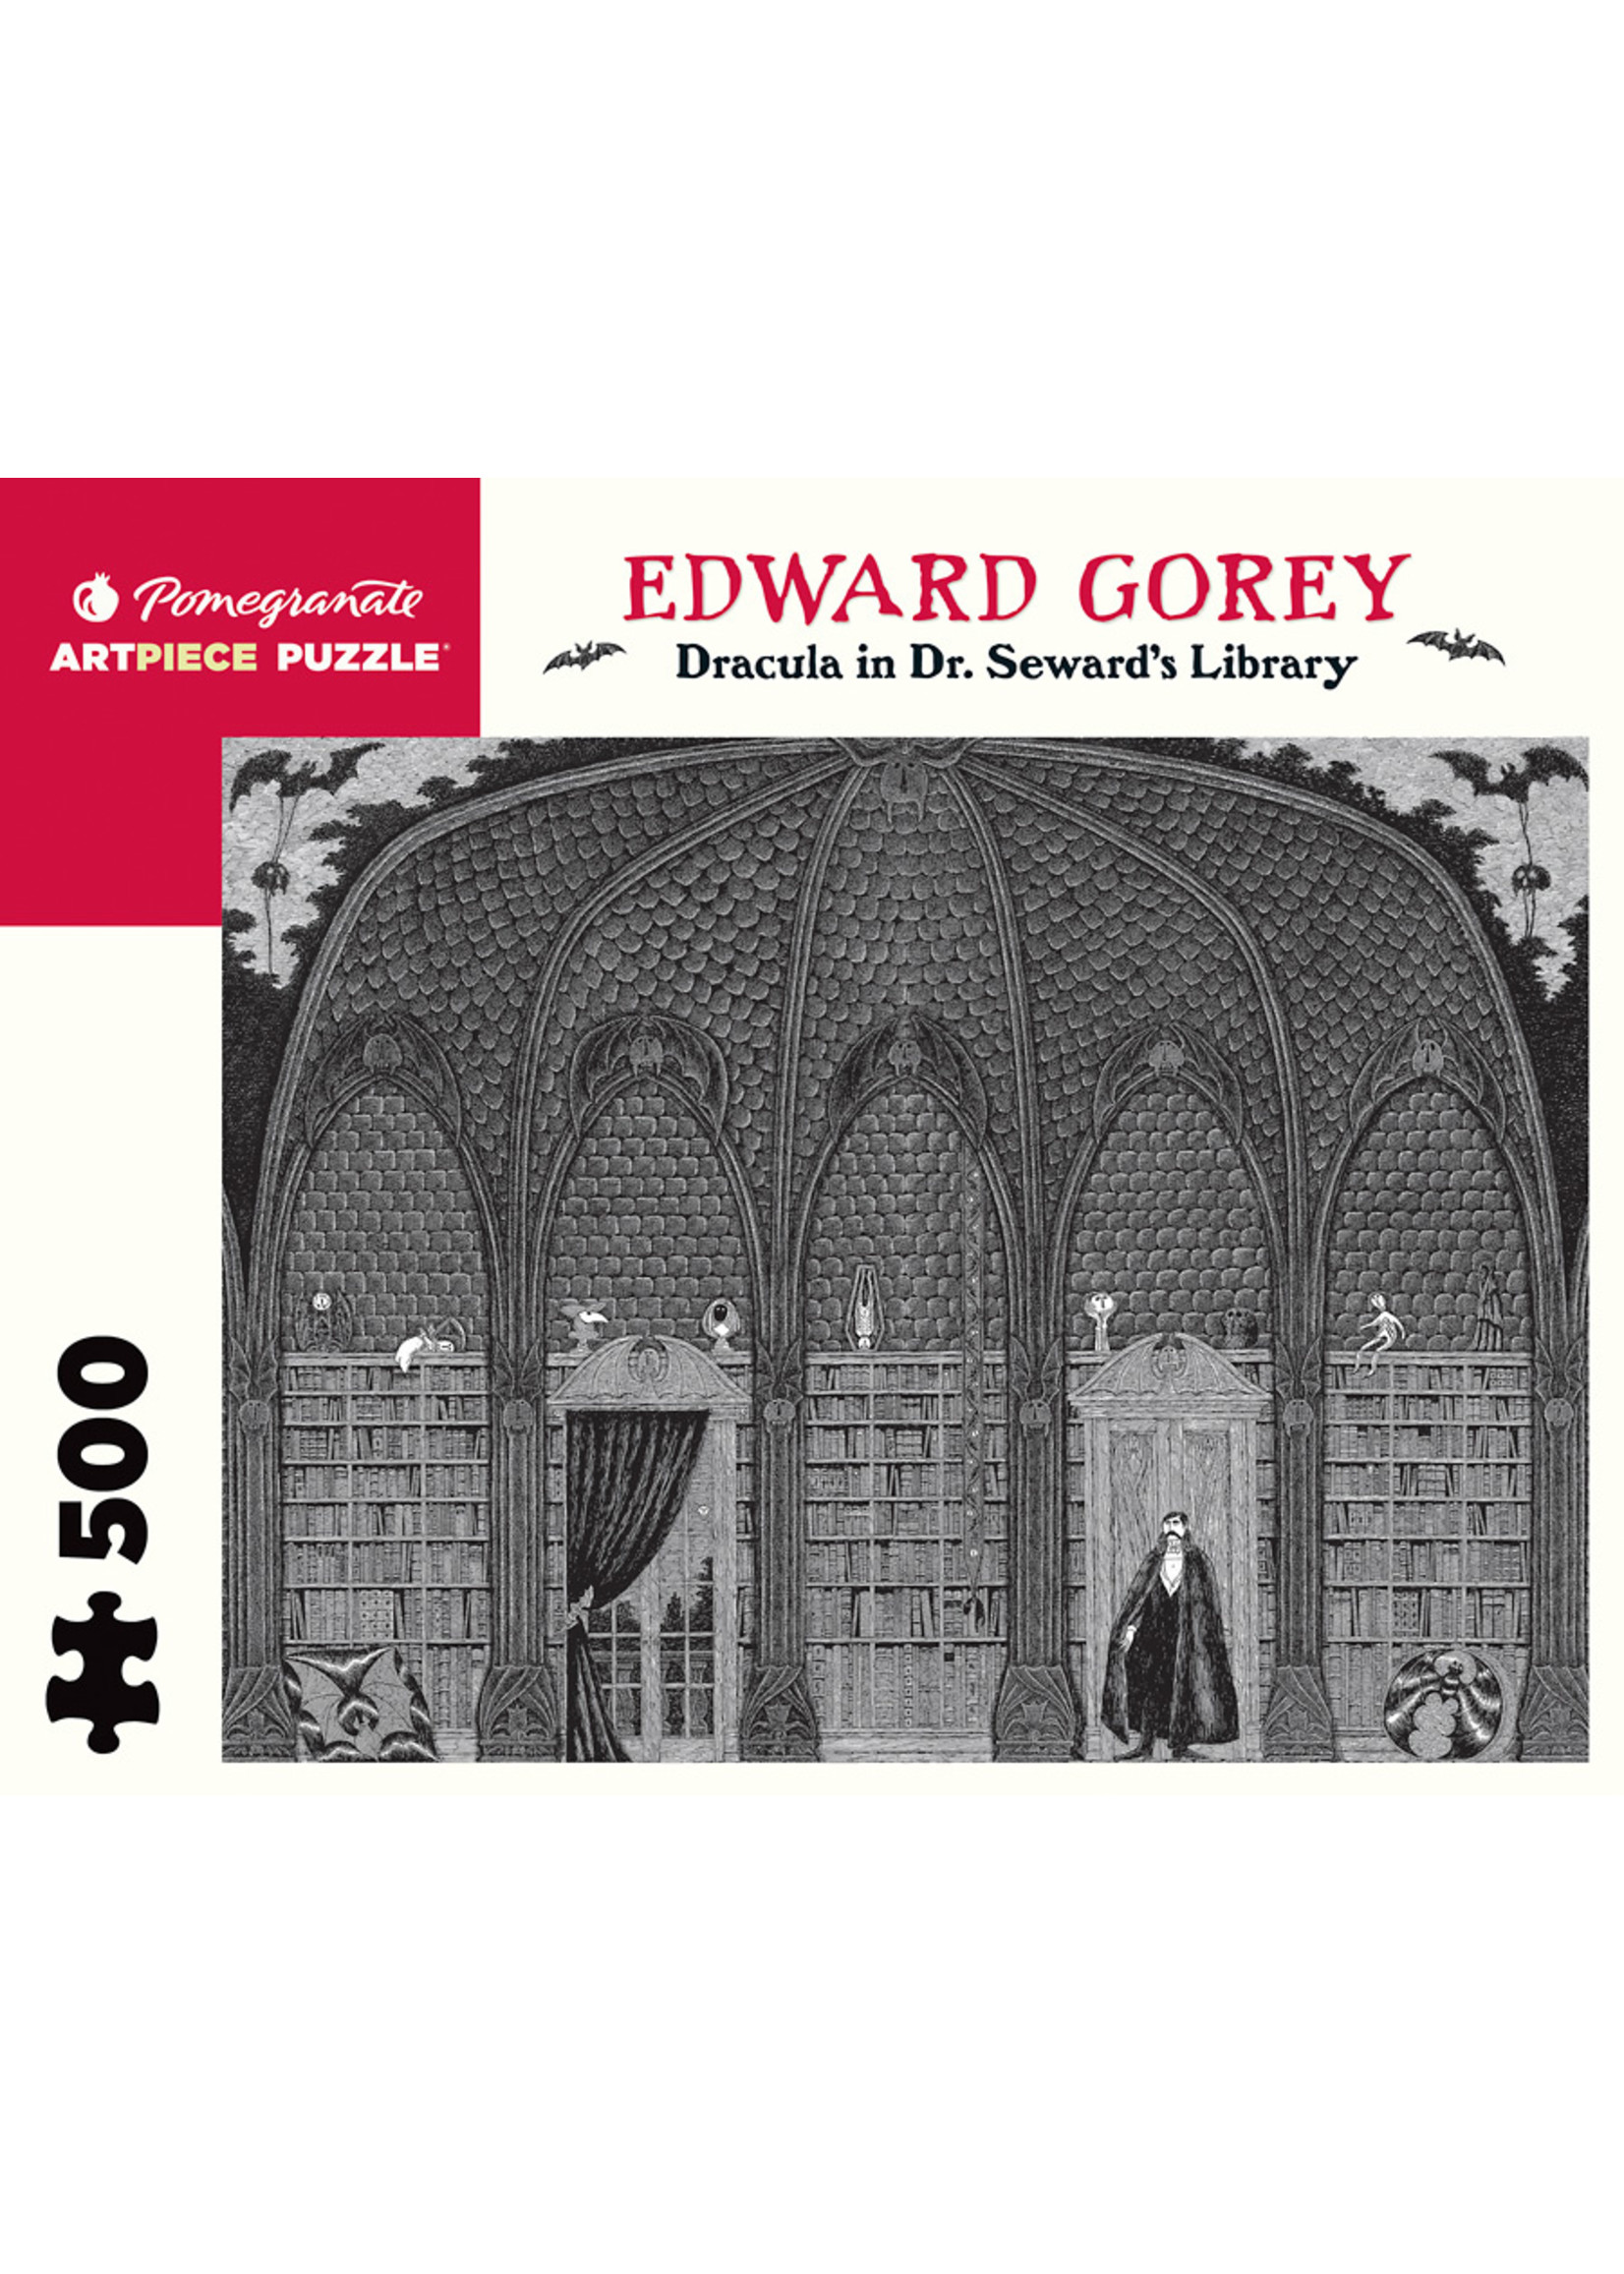 Pomegranate E Gorey: Dracula in Seward's Library - 500 Piece Puzzle